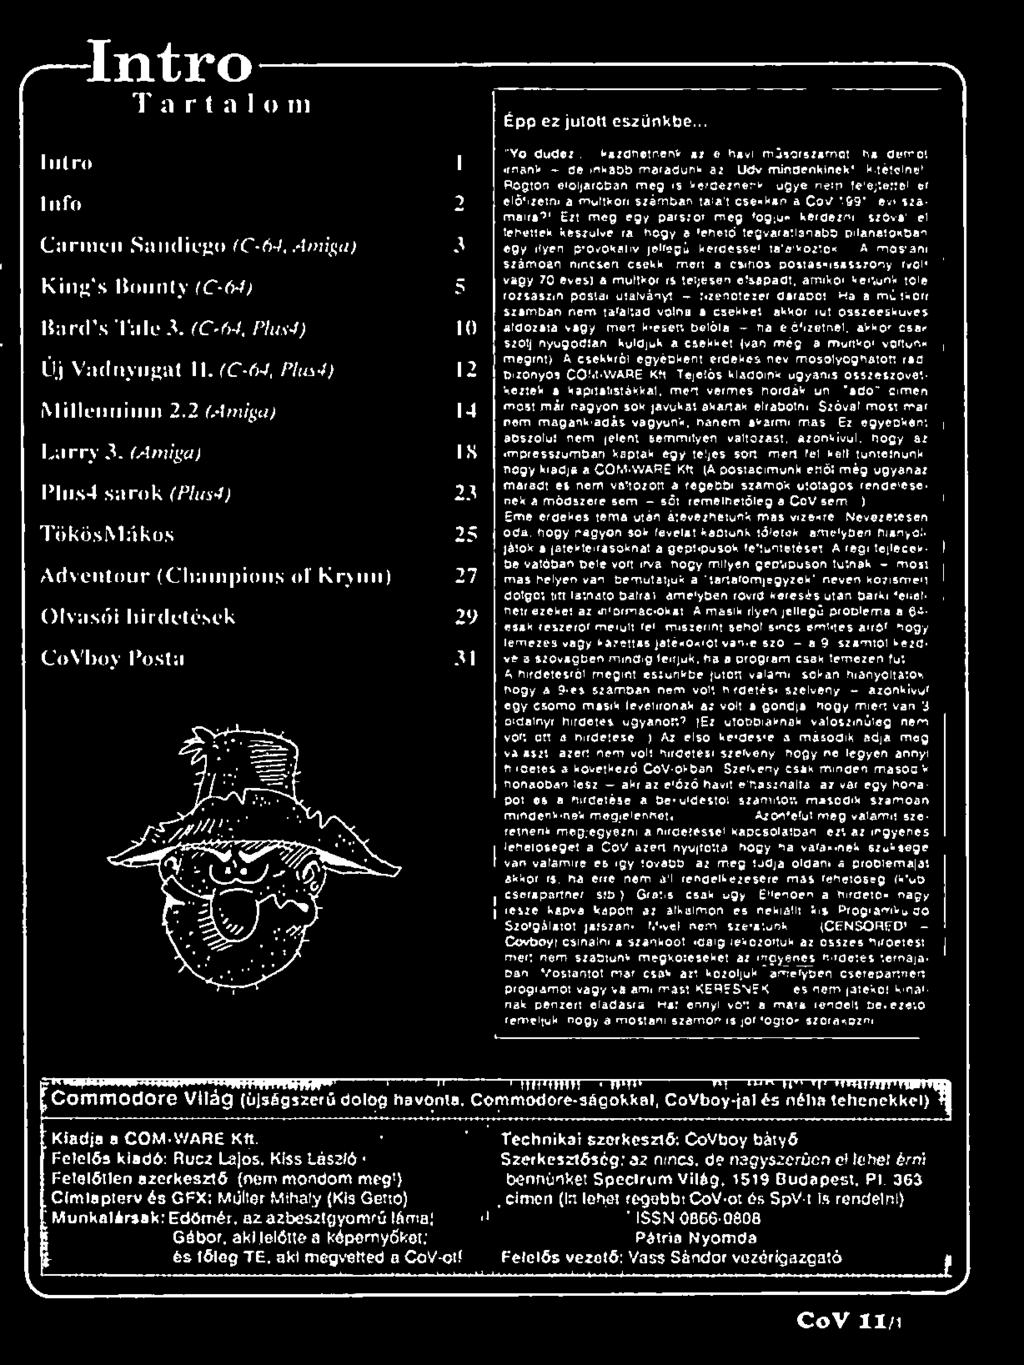 COMMODORE VILÁG 90/11. C64/1Z8, C16/Plus 4, AMIGA - PDF Ingyenes letöltés